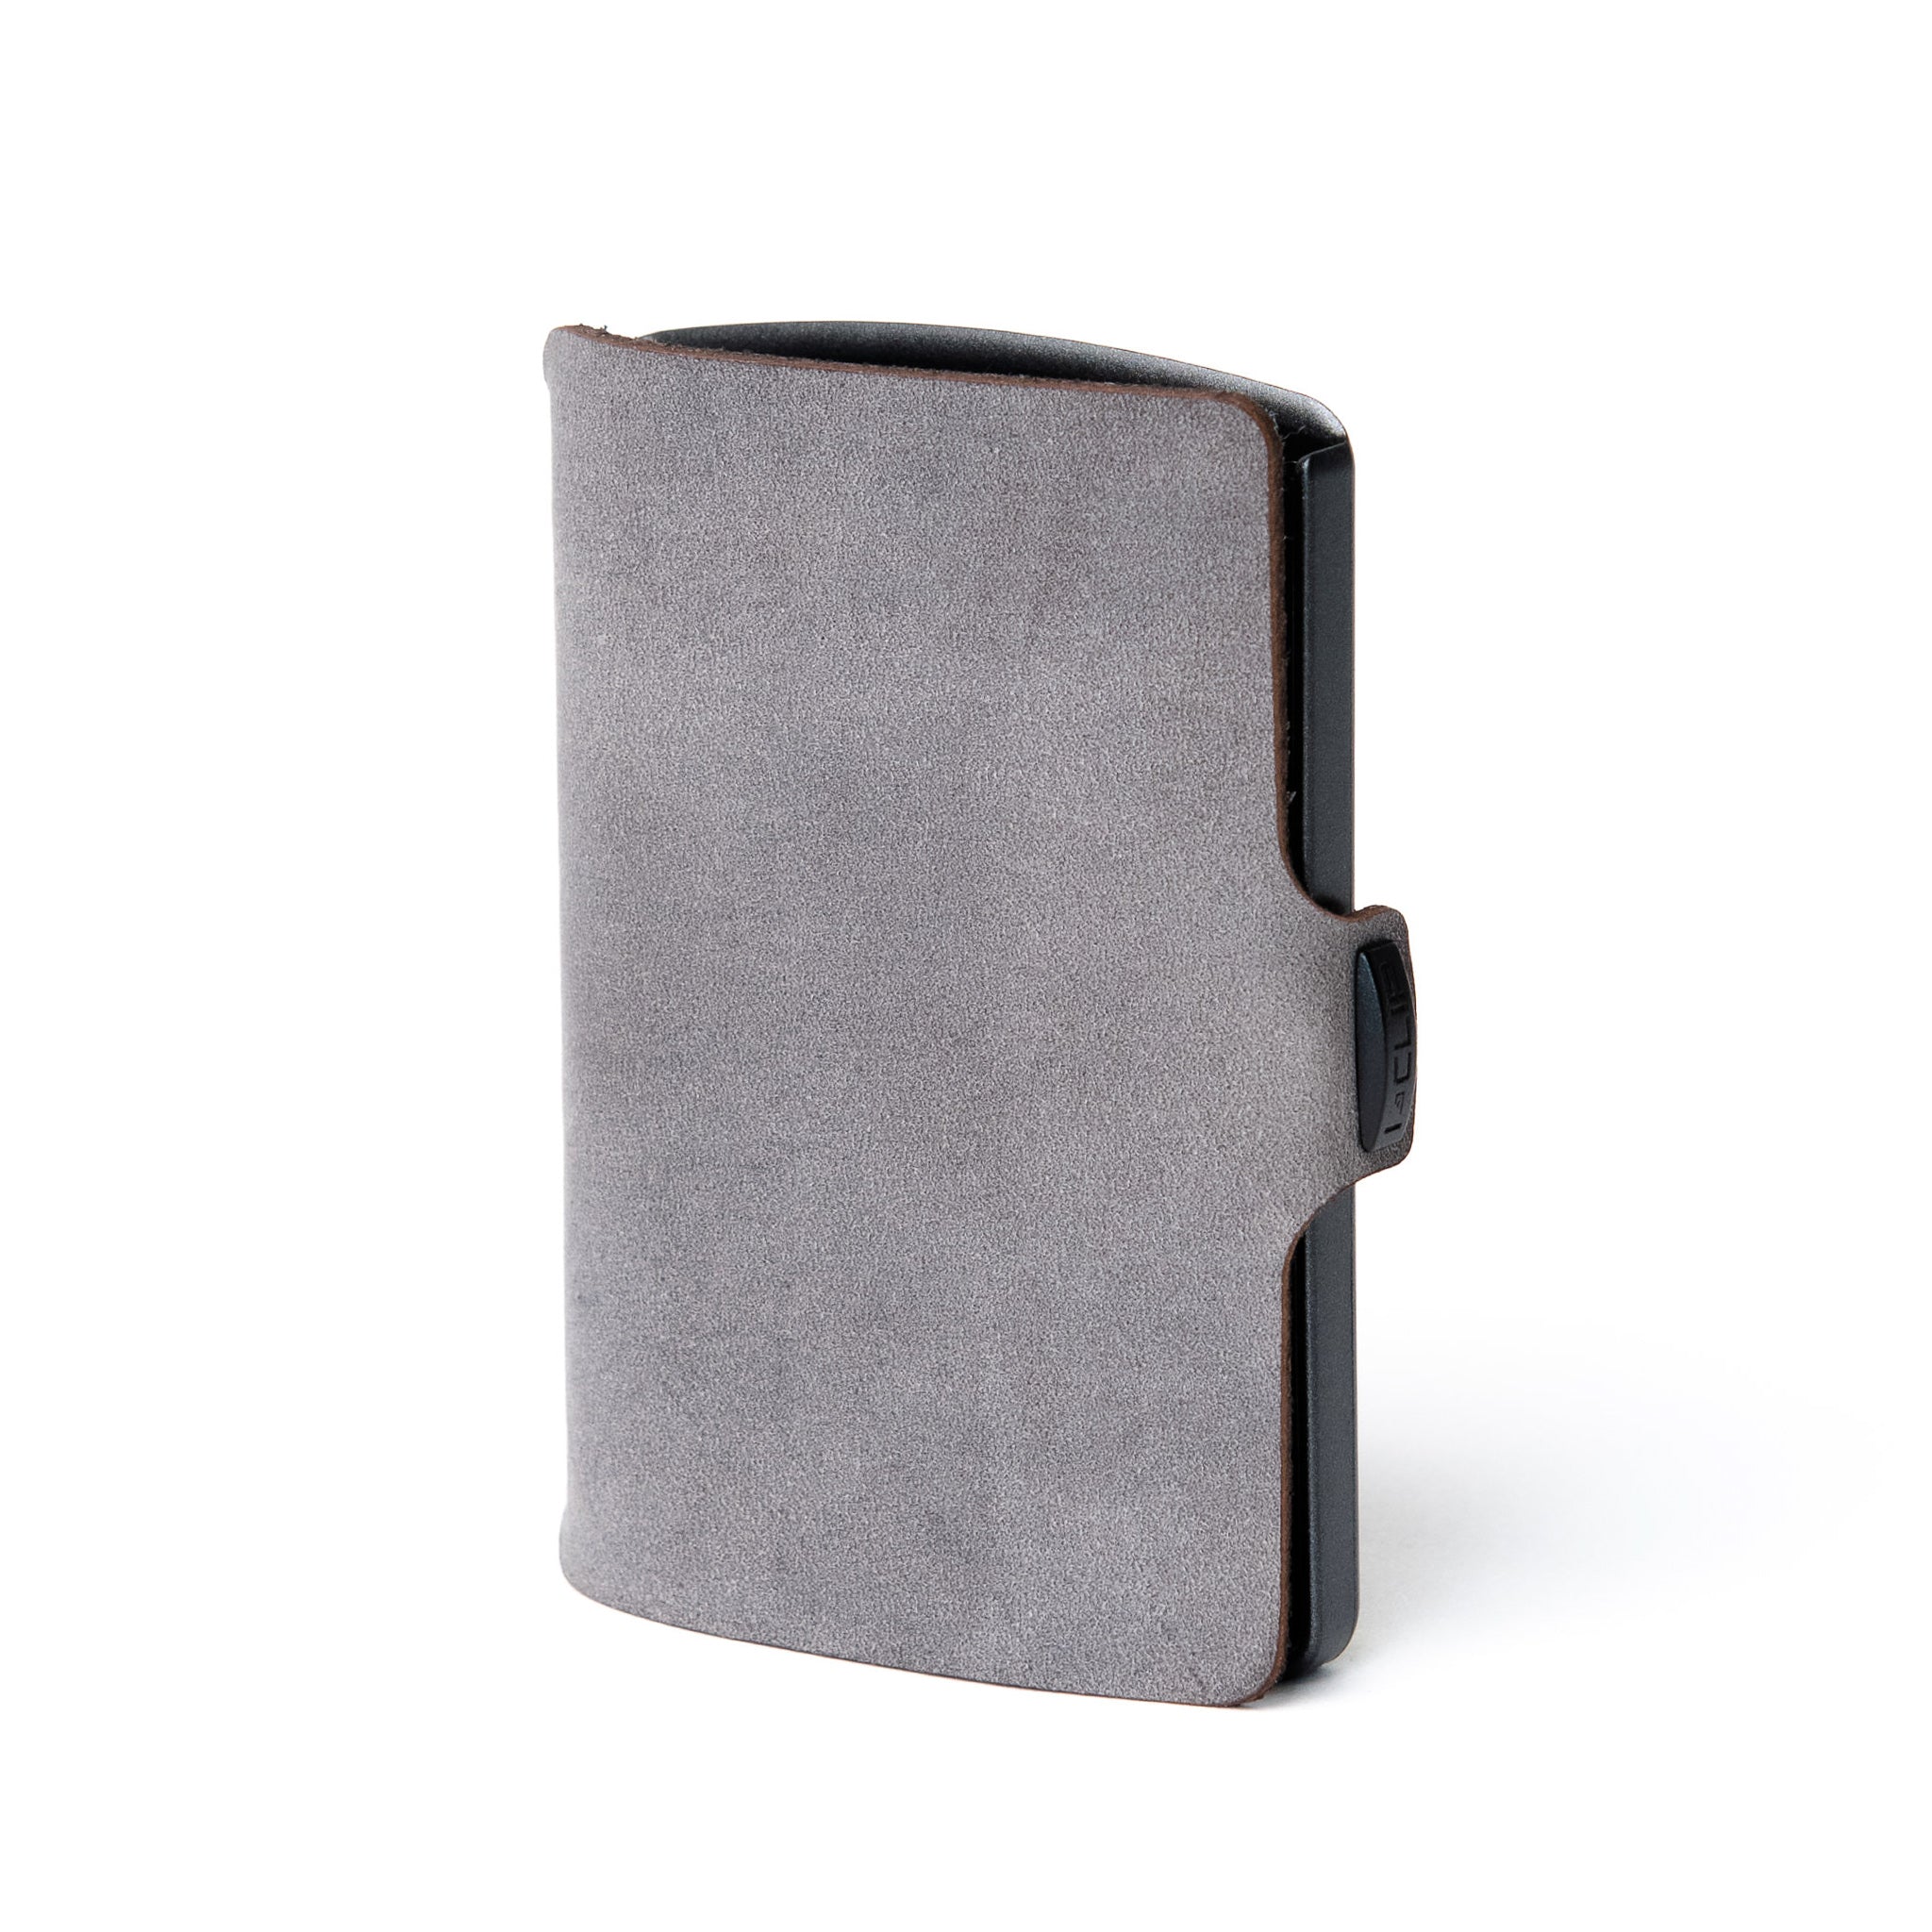 Soft Touch Leather - Slate / Gunmetal Black Frame - I-CLIP 